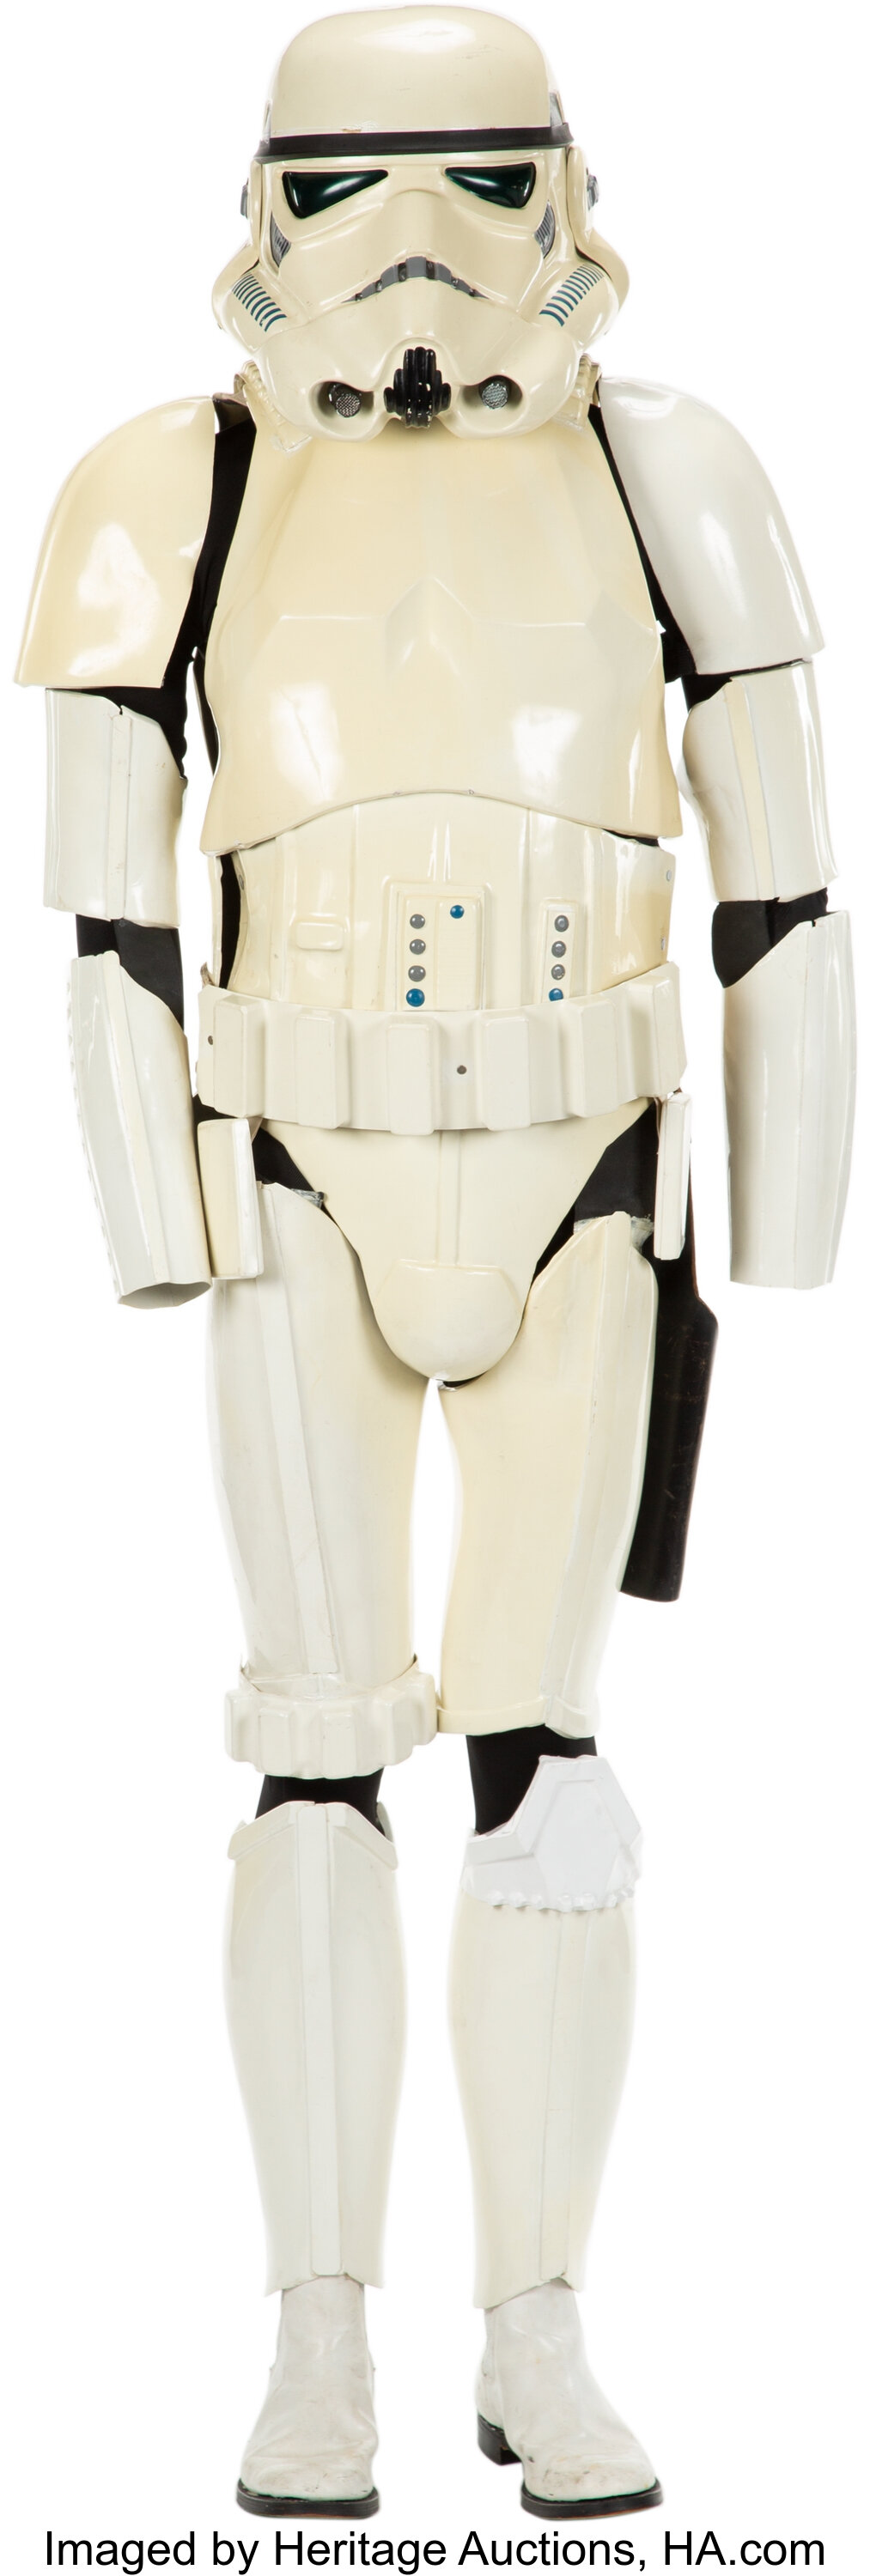 Stormtrooper Armor Heritage Auction 02.jpeg